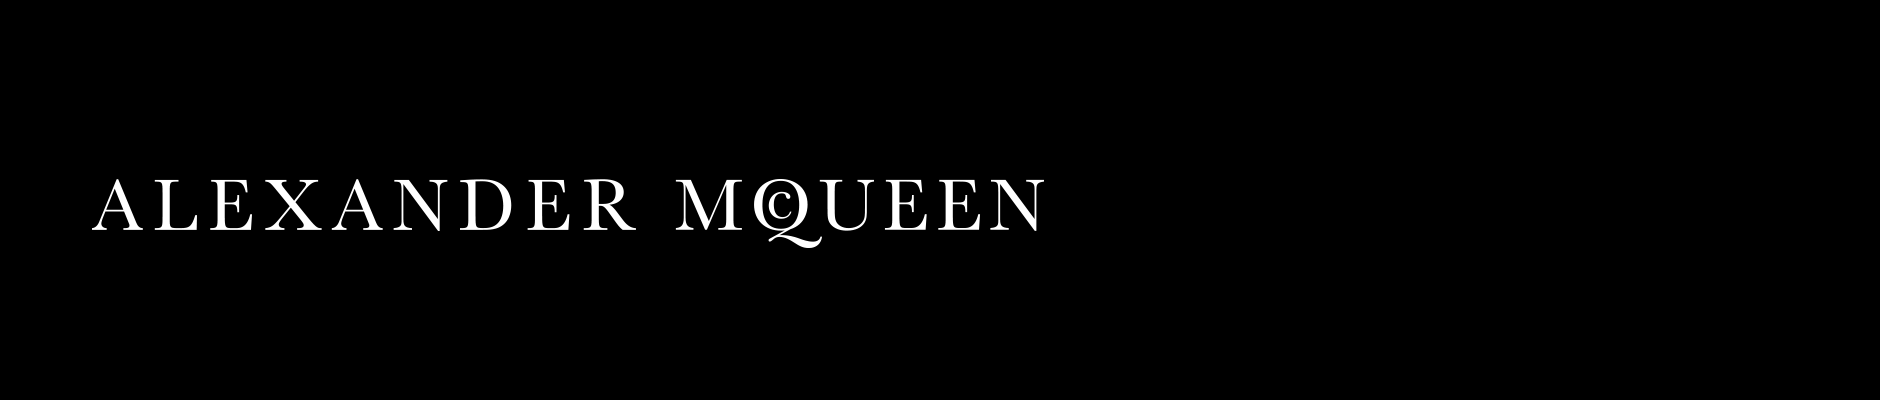 Alexander McQueen Logo - Alexander McQueen Collection at Neiman Marcus Last Call